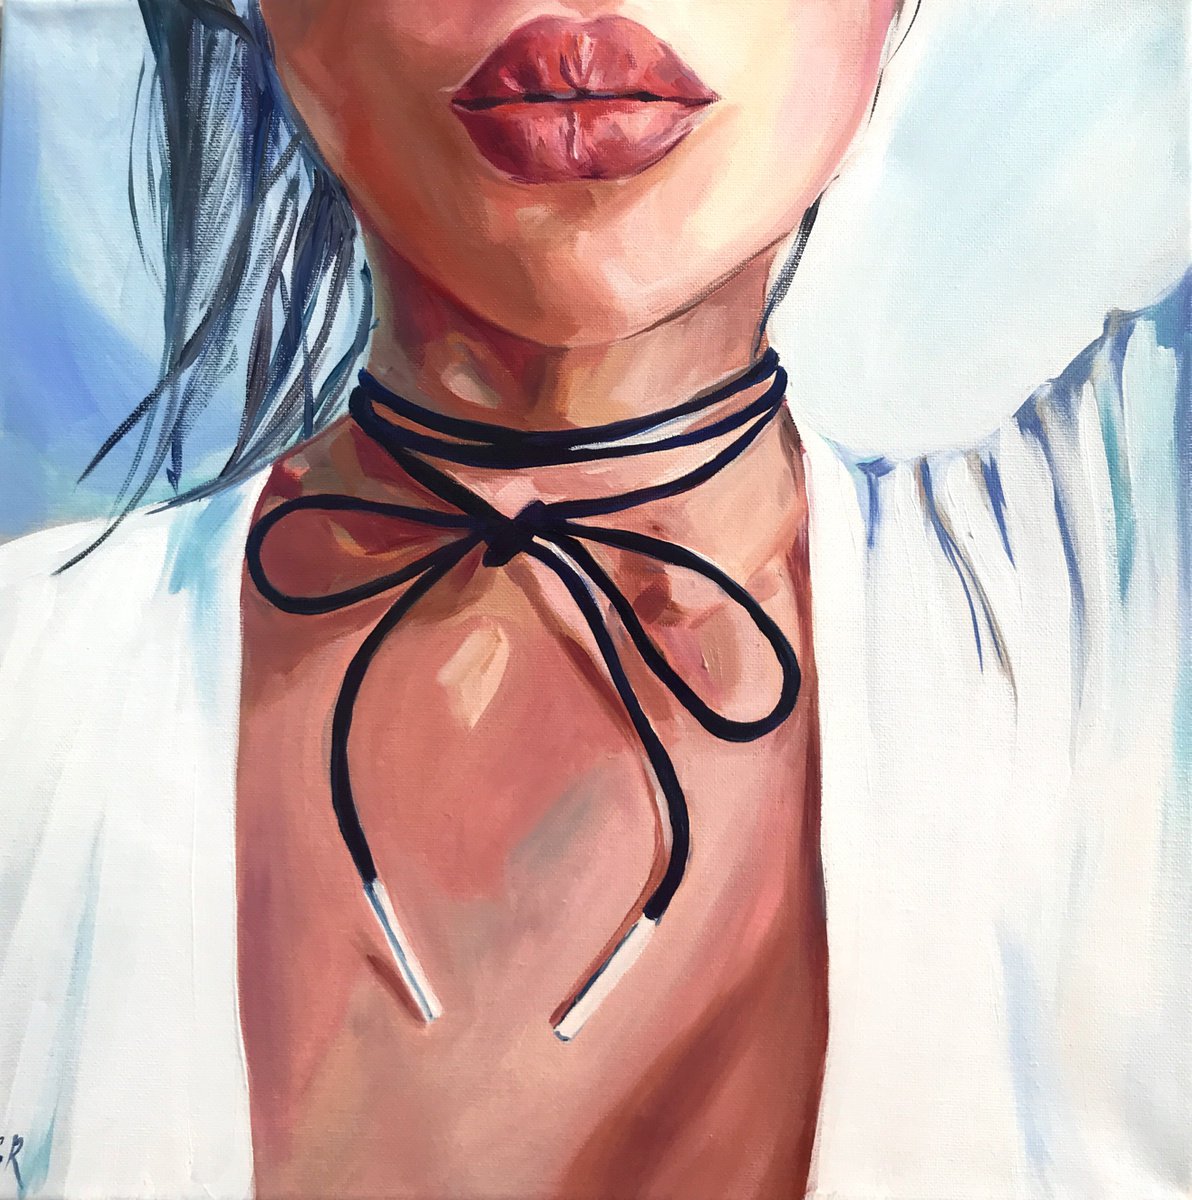 TENDER - oil painting, full lips, woman, erotic art, original gift, home decor, poster, of... by Sasha Robinson